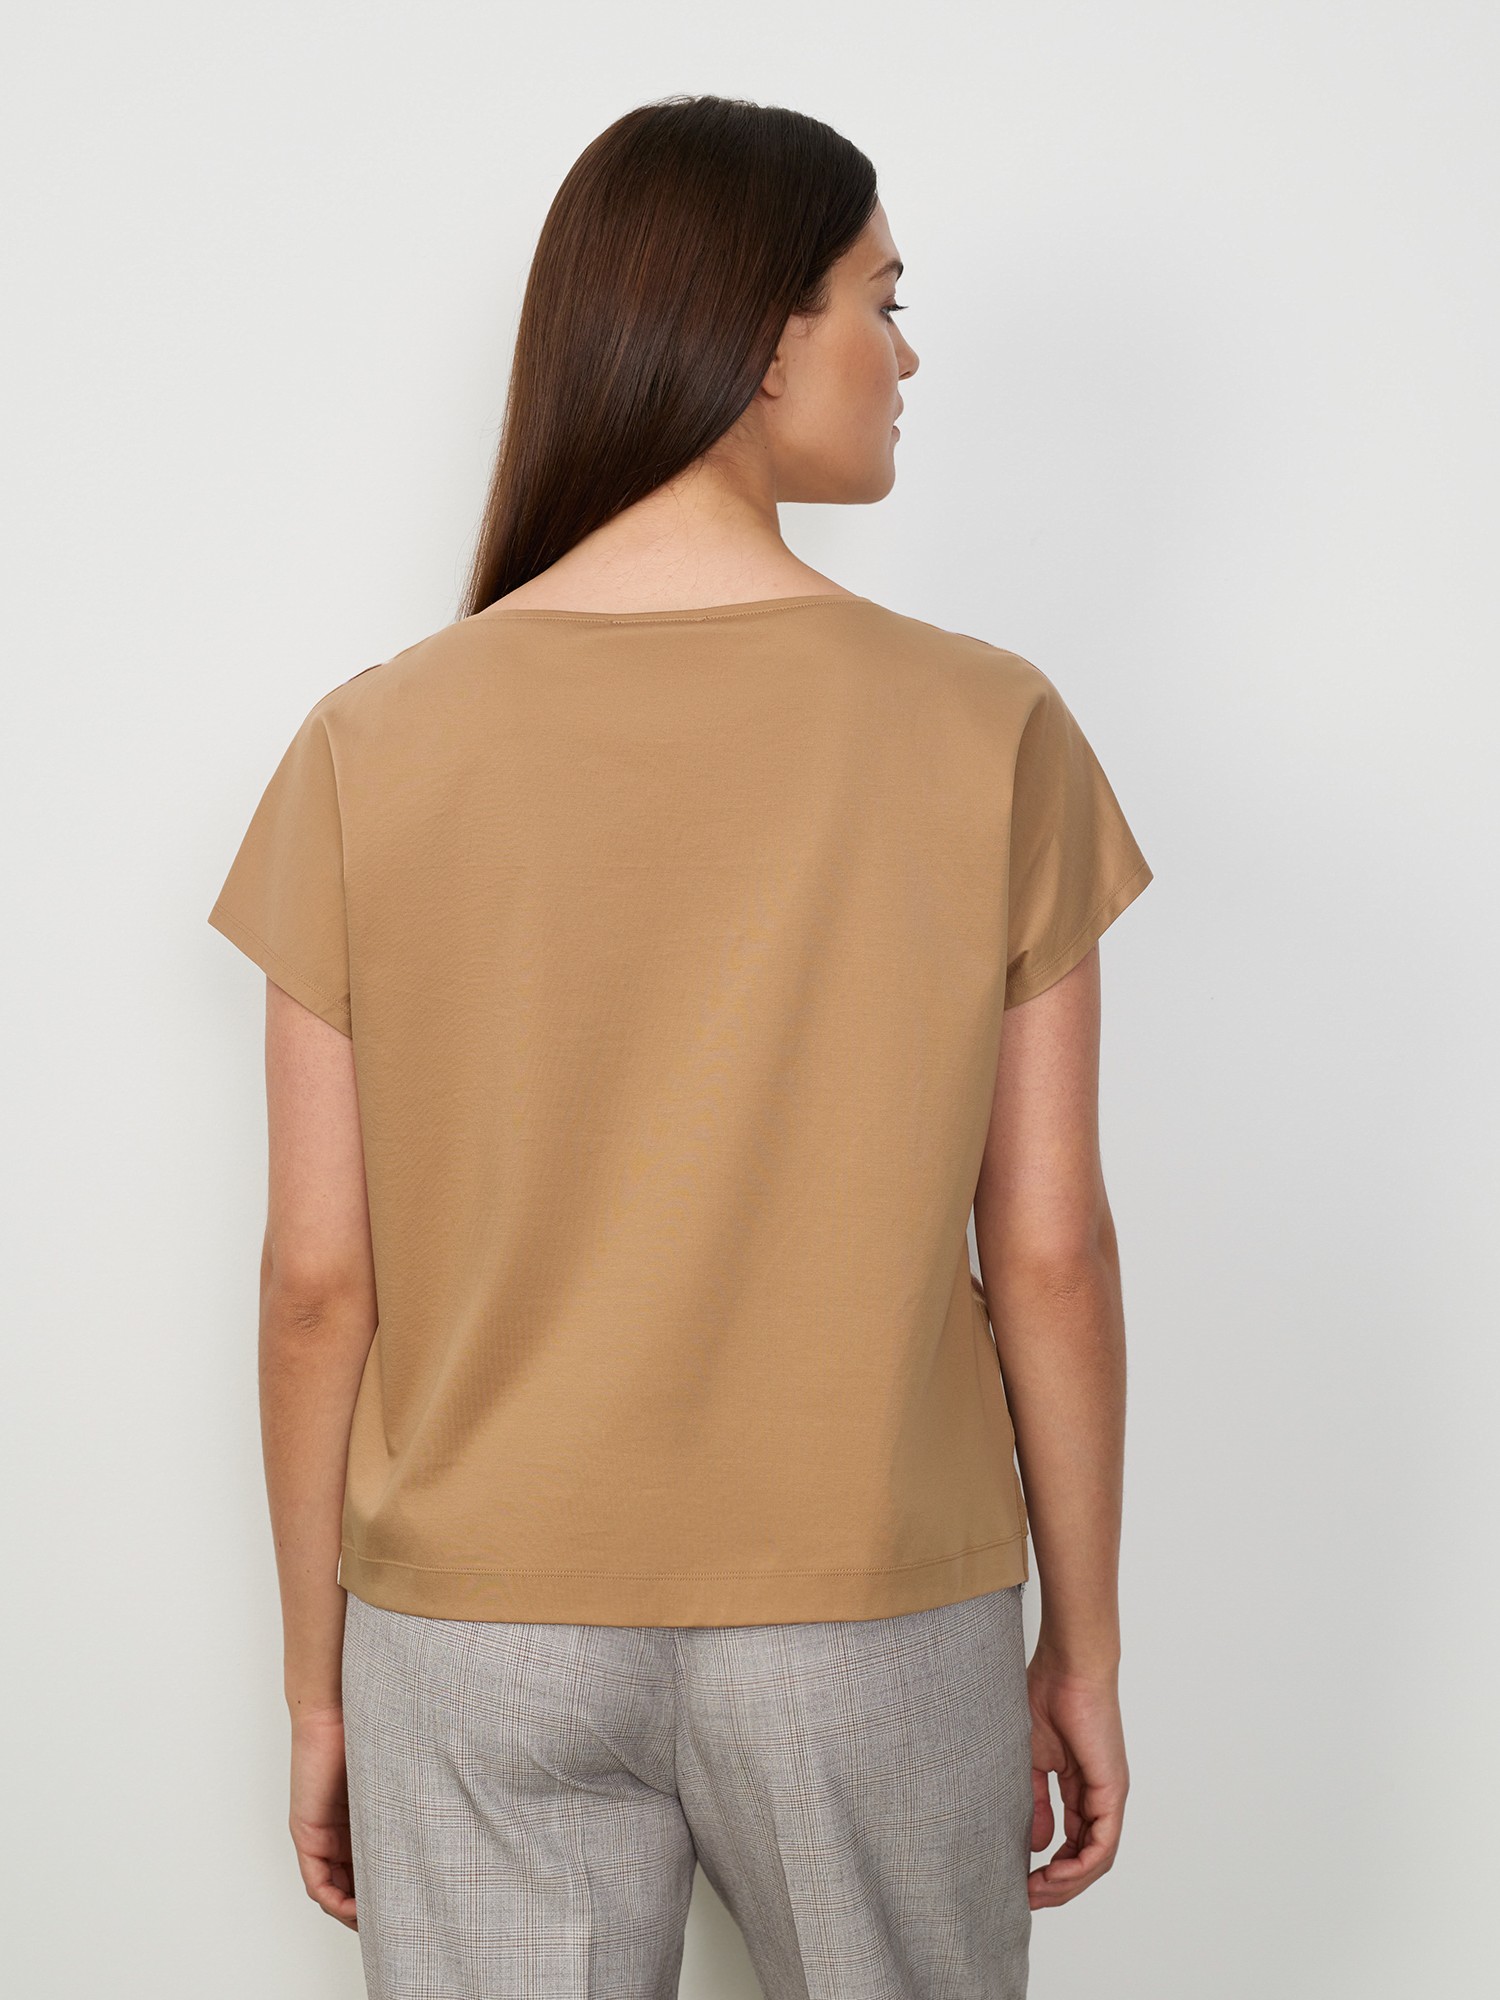 Блуза в полоску Lalis BL1068, цвет коричнево-бежевый, размер 46 - фото 4